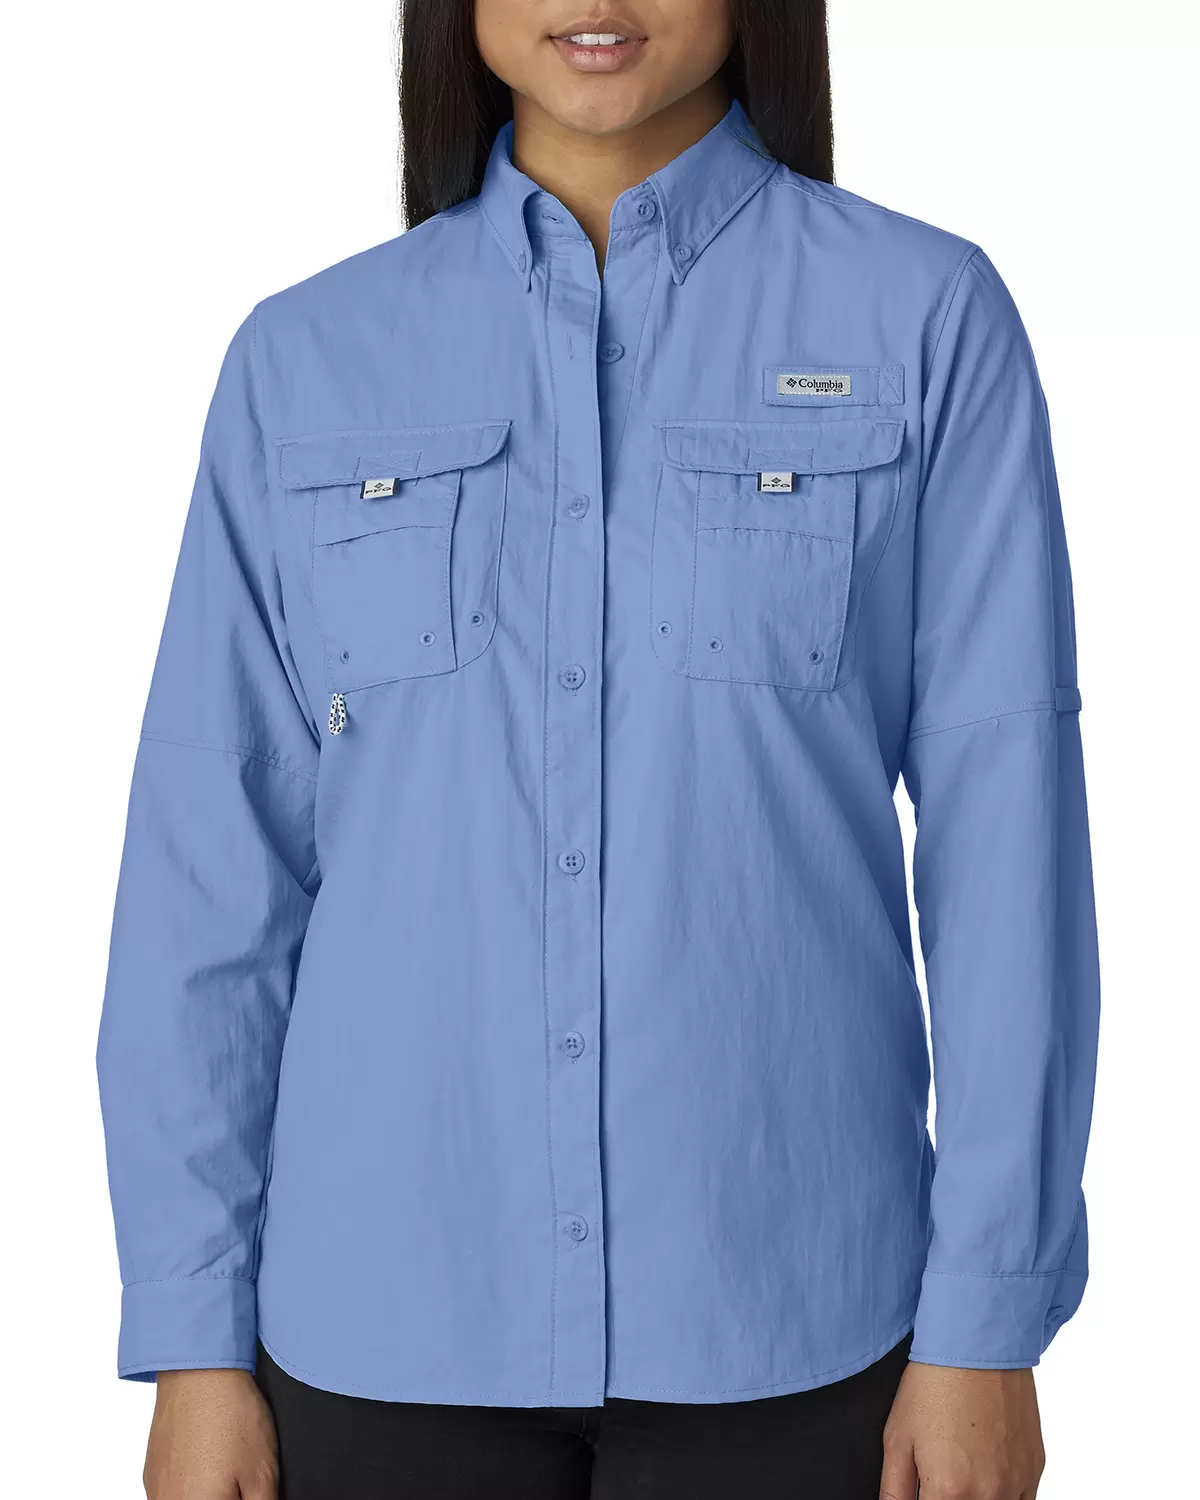 Columbia Sportswear 7314 Ladies' Bahama™ Long-Sleeve Shirt - From $34.18